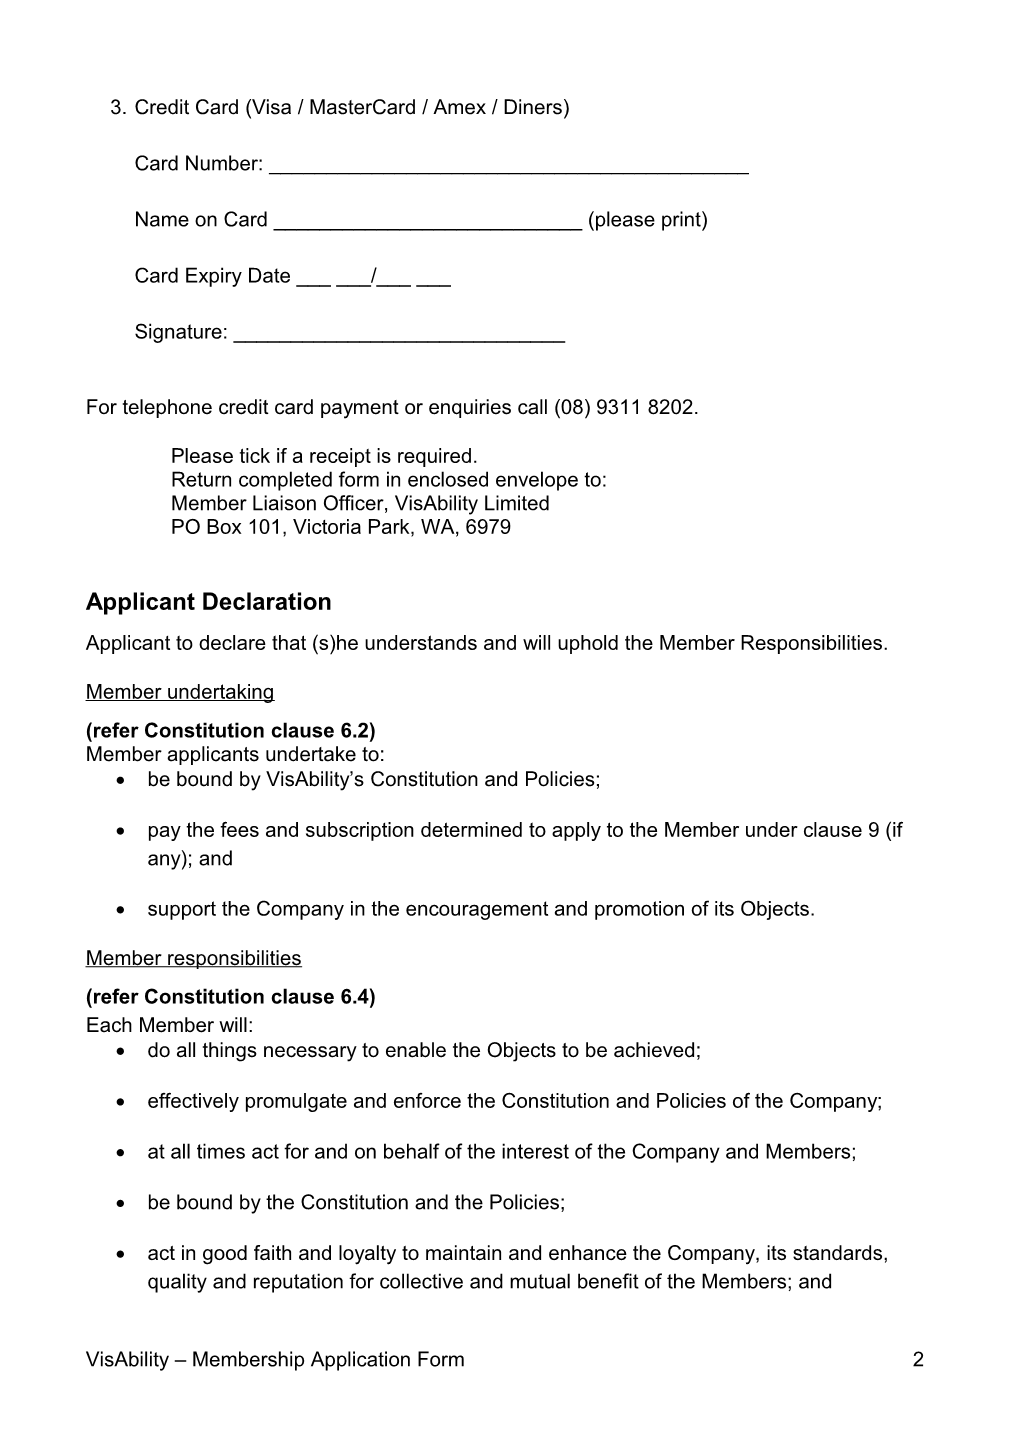 Visability Membership Application Form